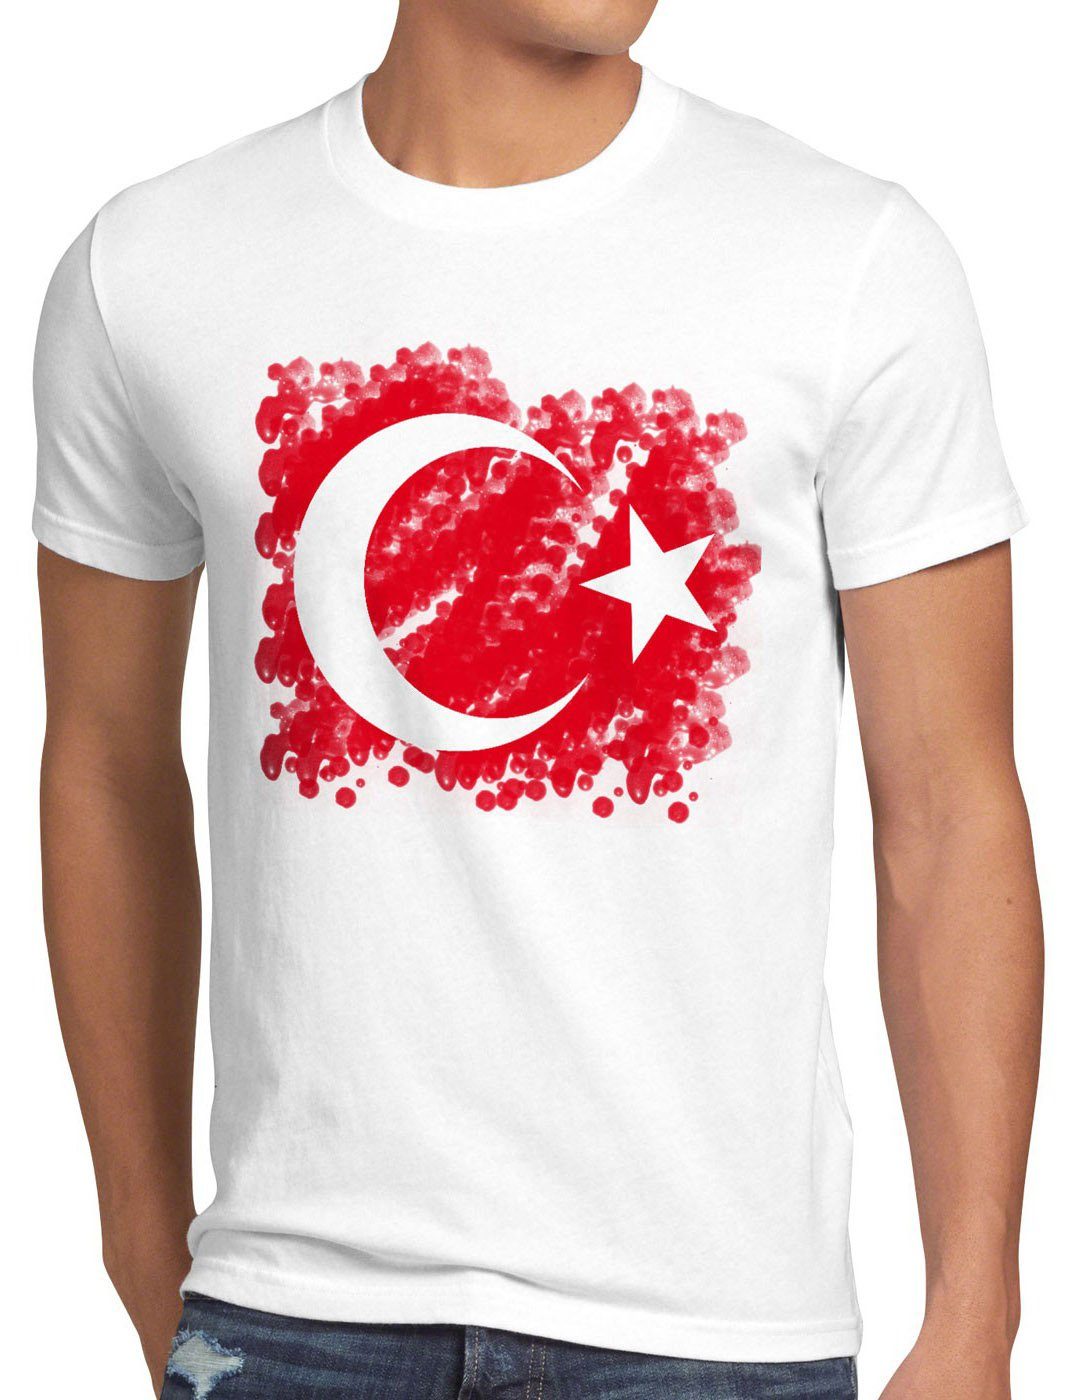 Stern Türkiye weiß Print-Shirt Flag Flagge Turkey Herren rot Türkei style3 Mond T-Shirt istanbul erdogan